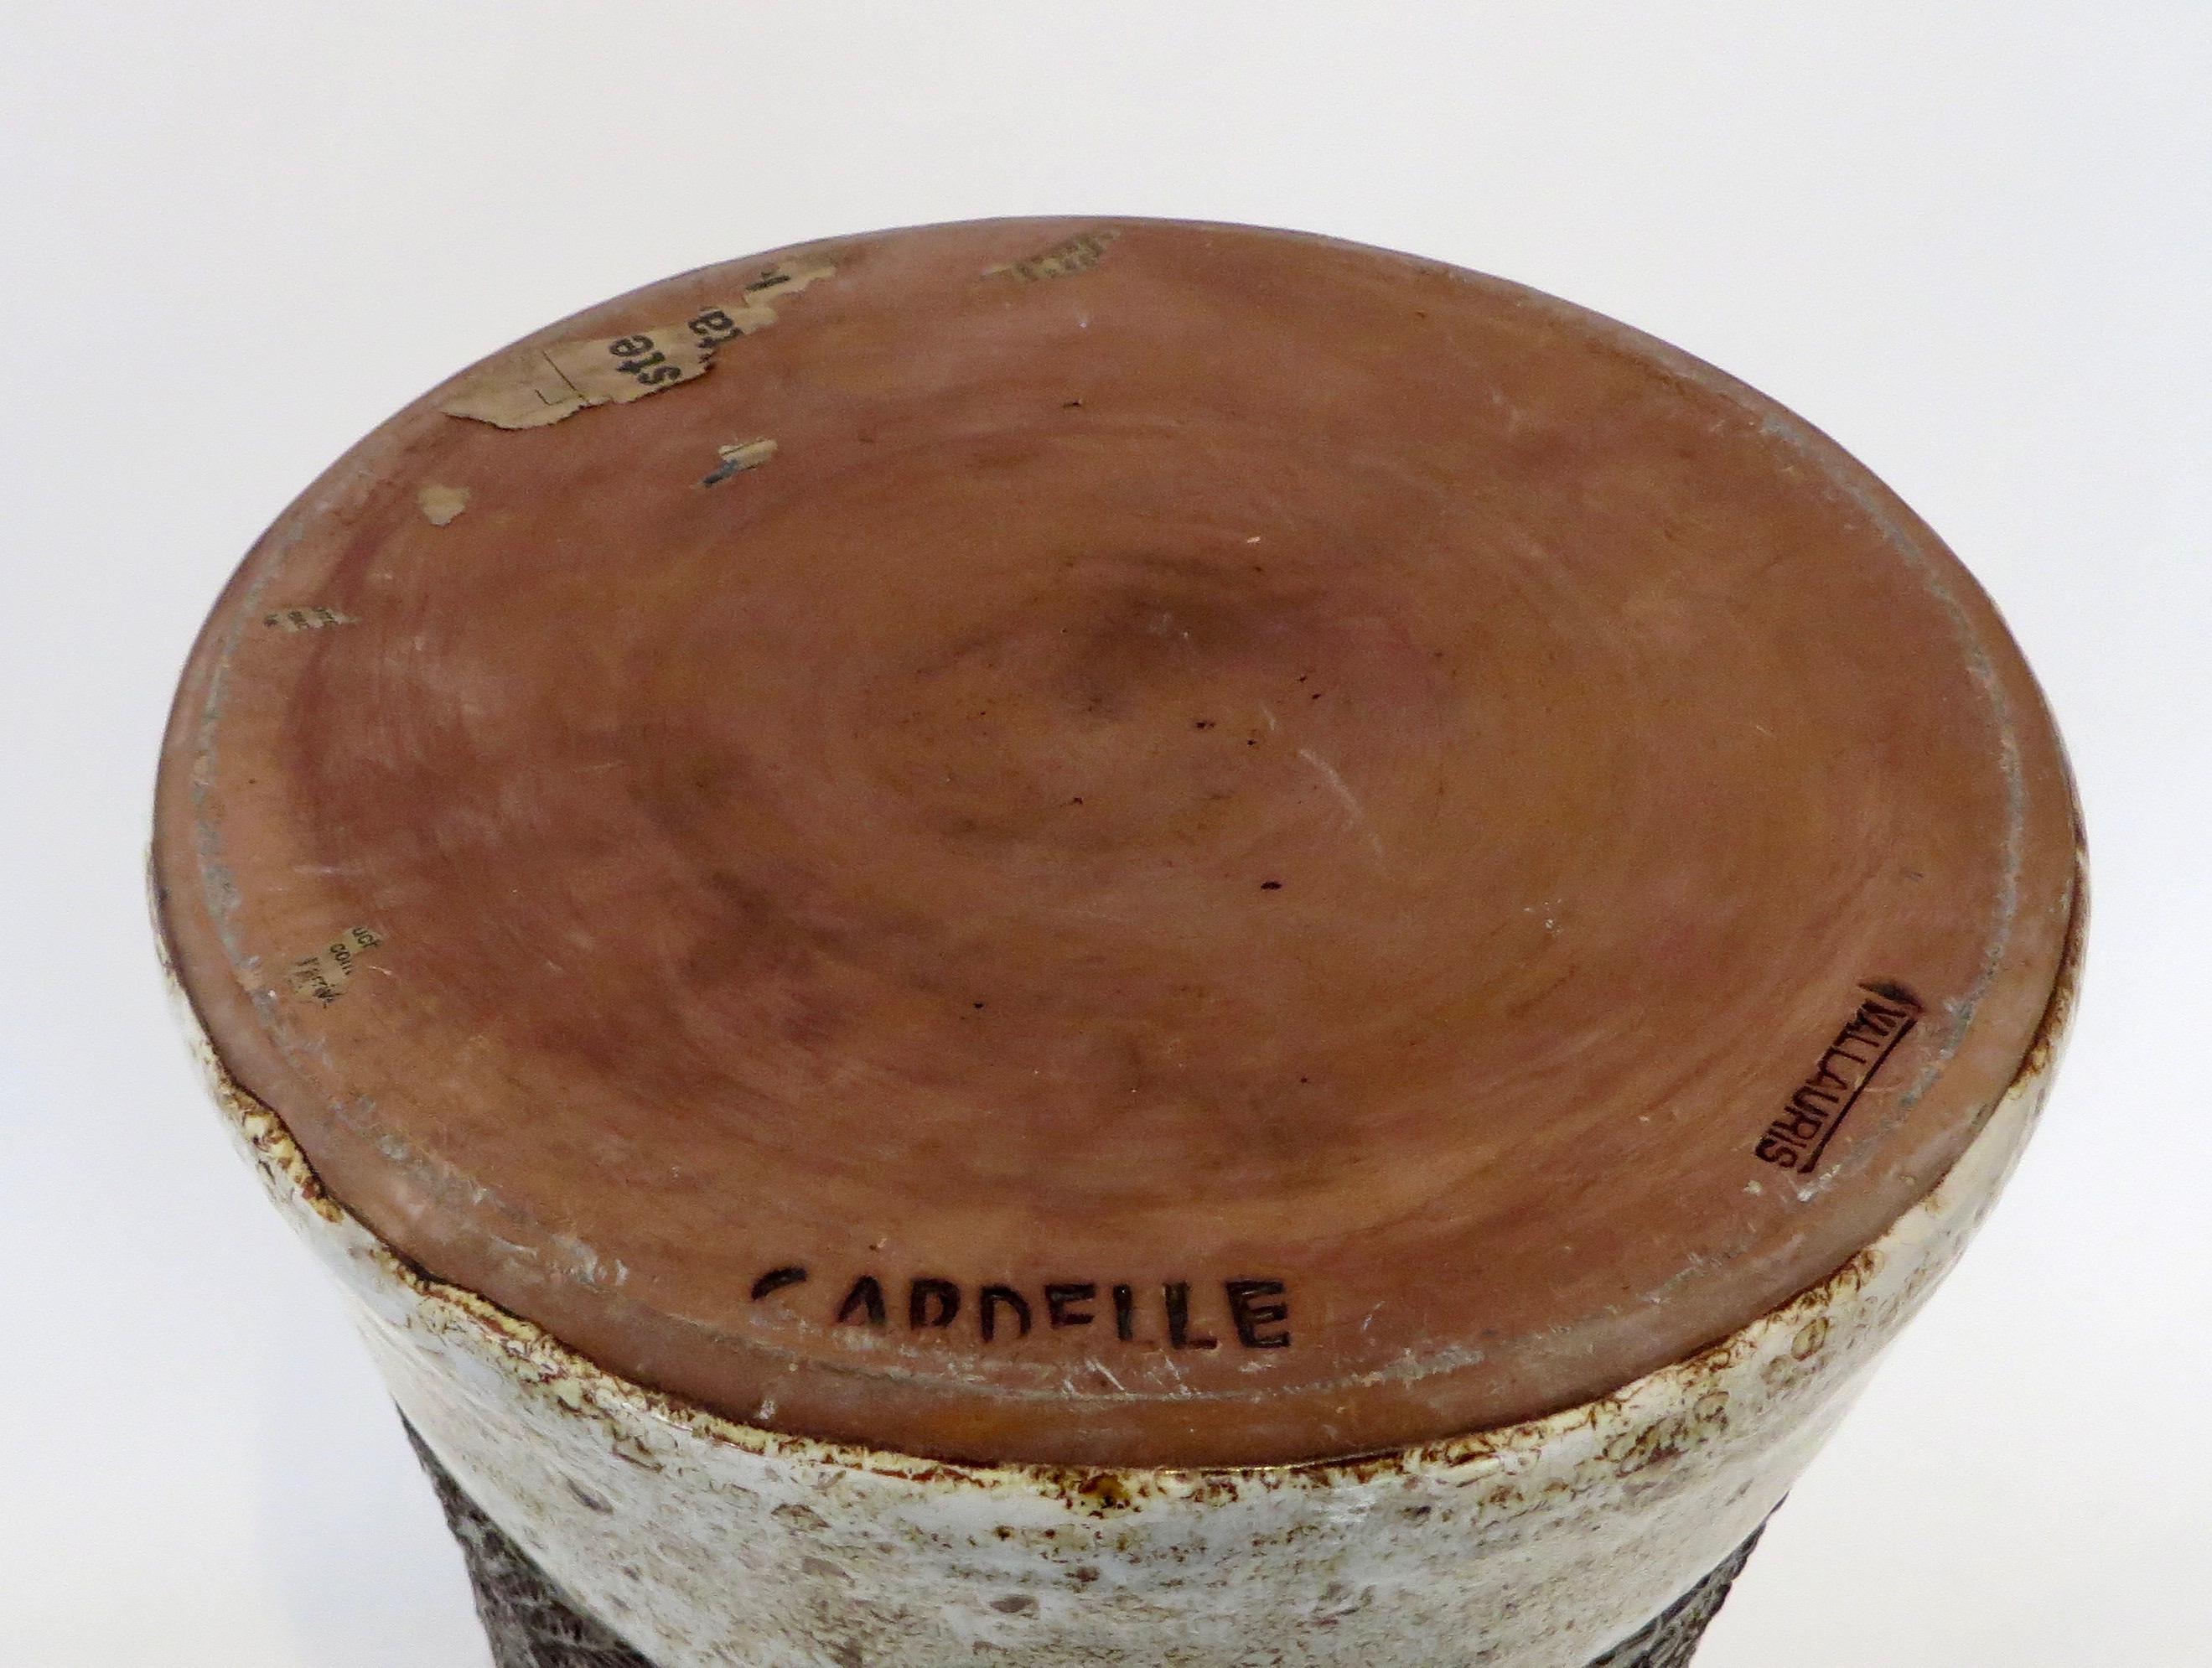 Valluaris French Polychrome Monumental Tall Ceramic Vase Signed Cardelle  6